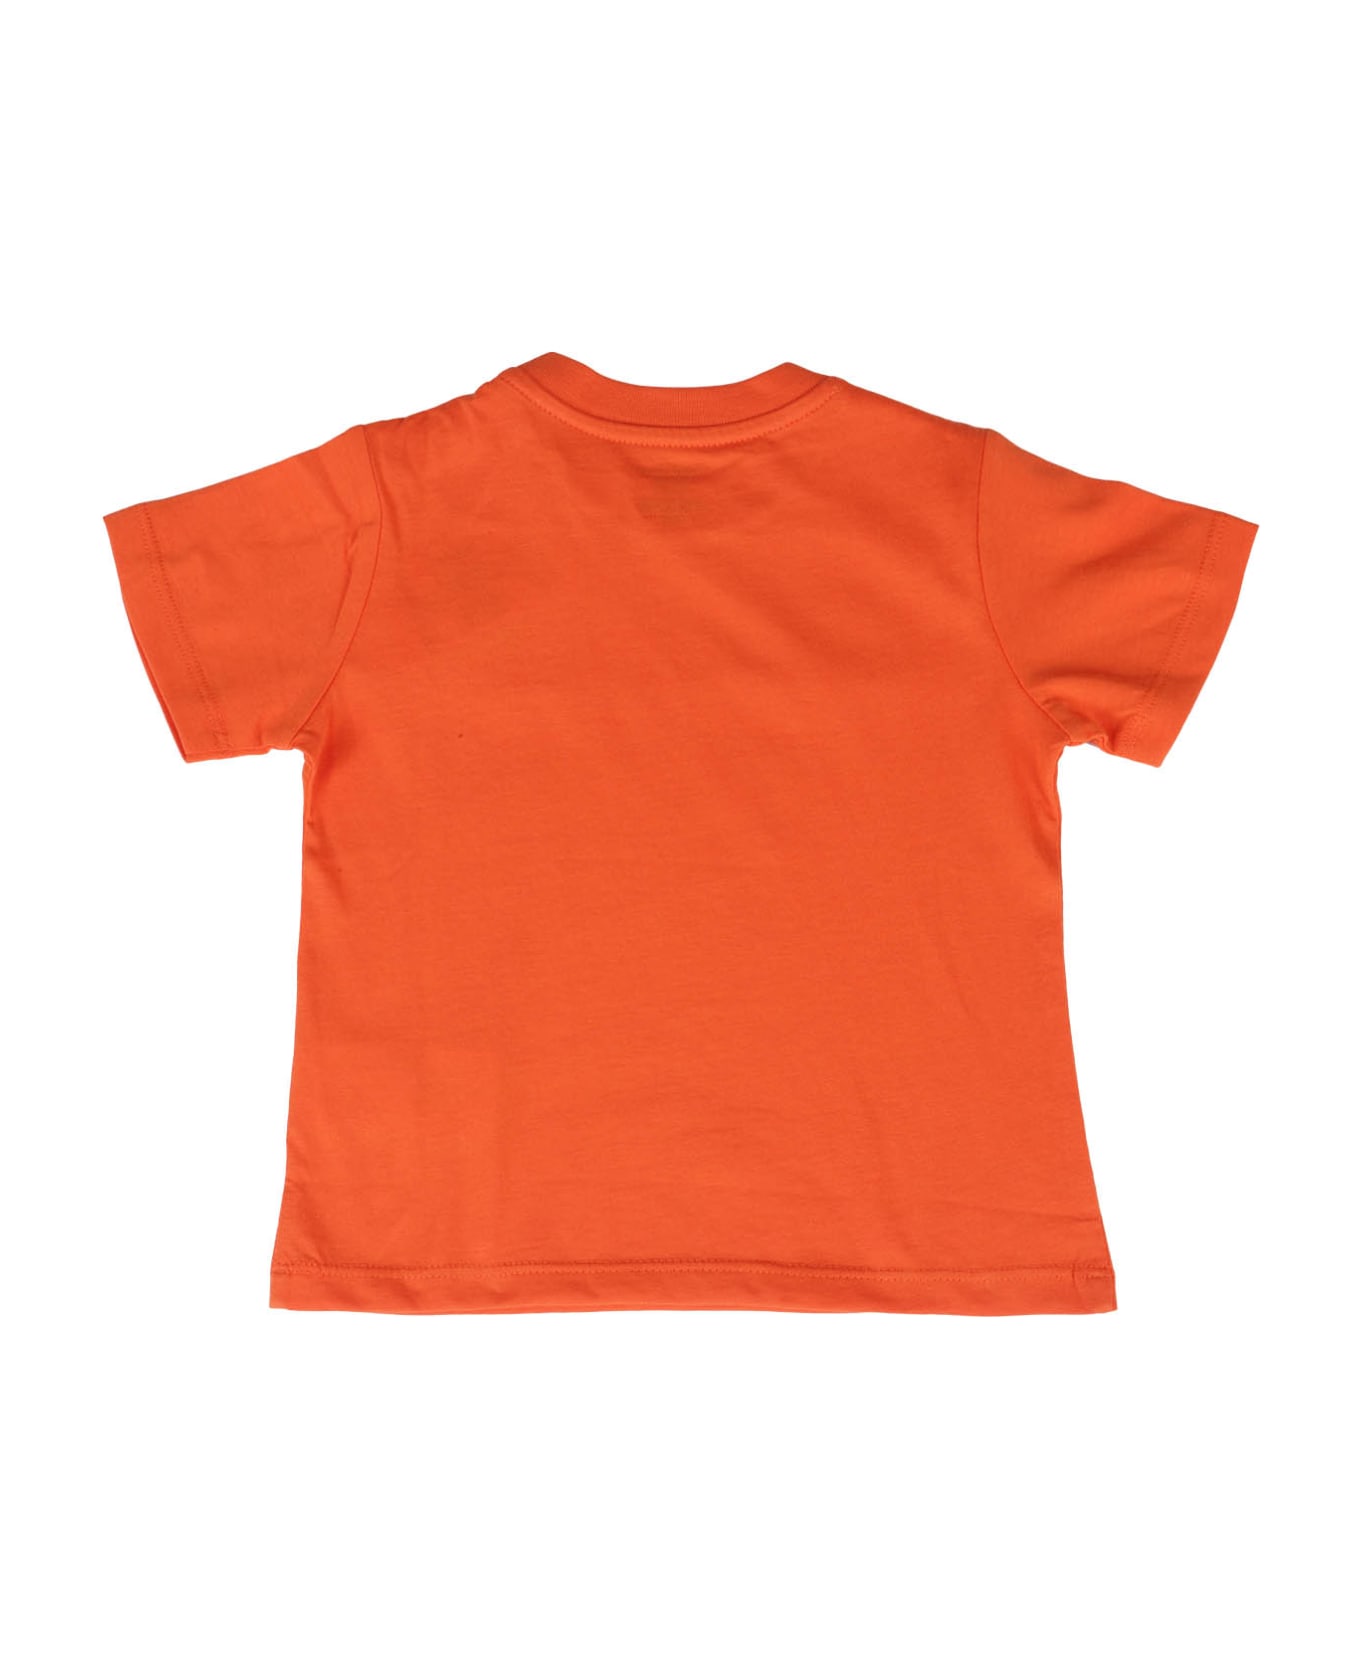 Polo Ralph Lauren Tshirt - Orange